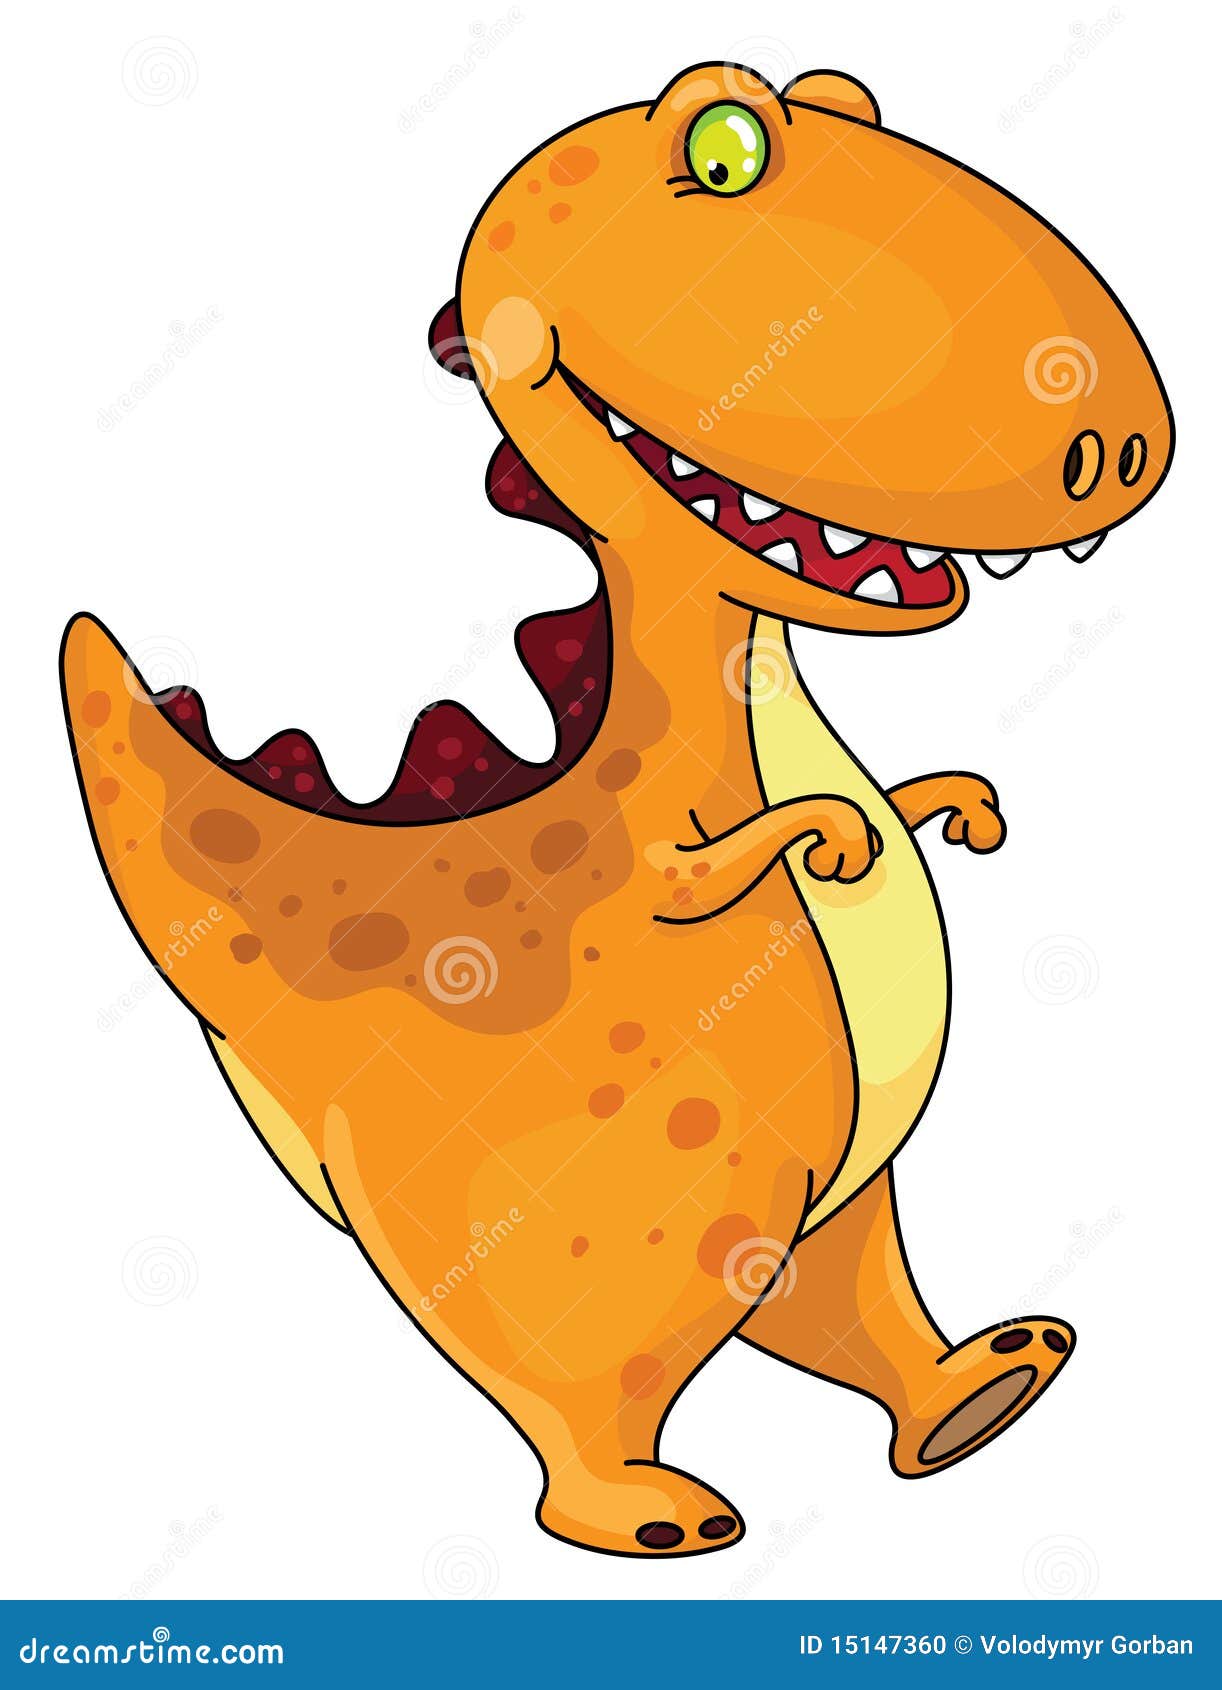 Funny dinosaur stock vector. Illustration of yellow, smile ...